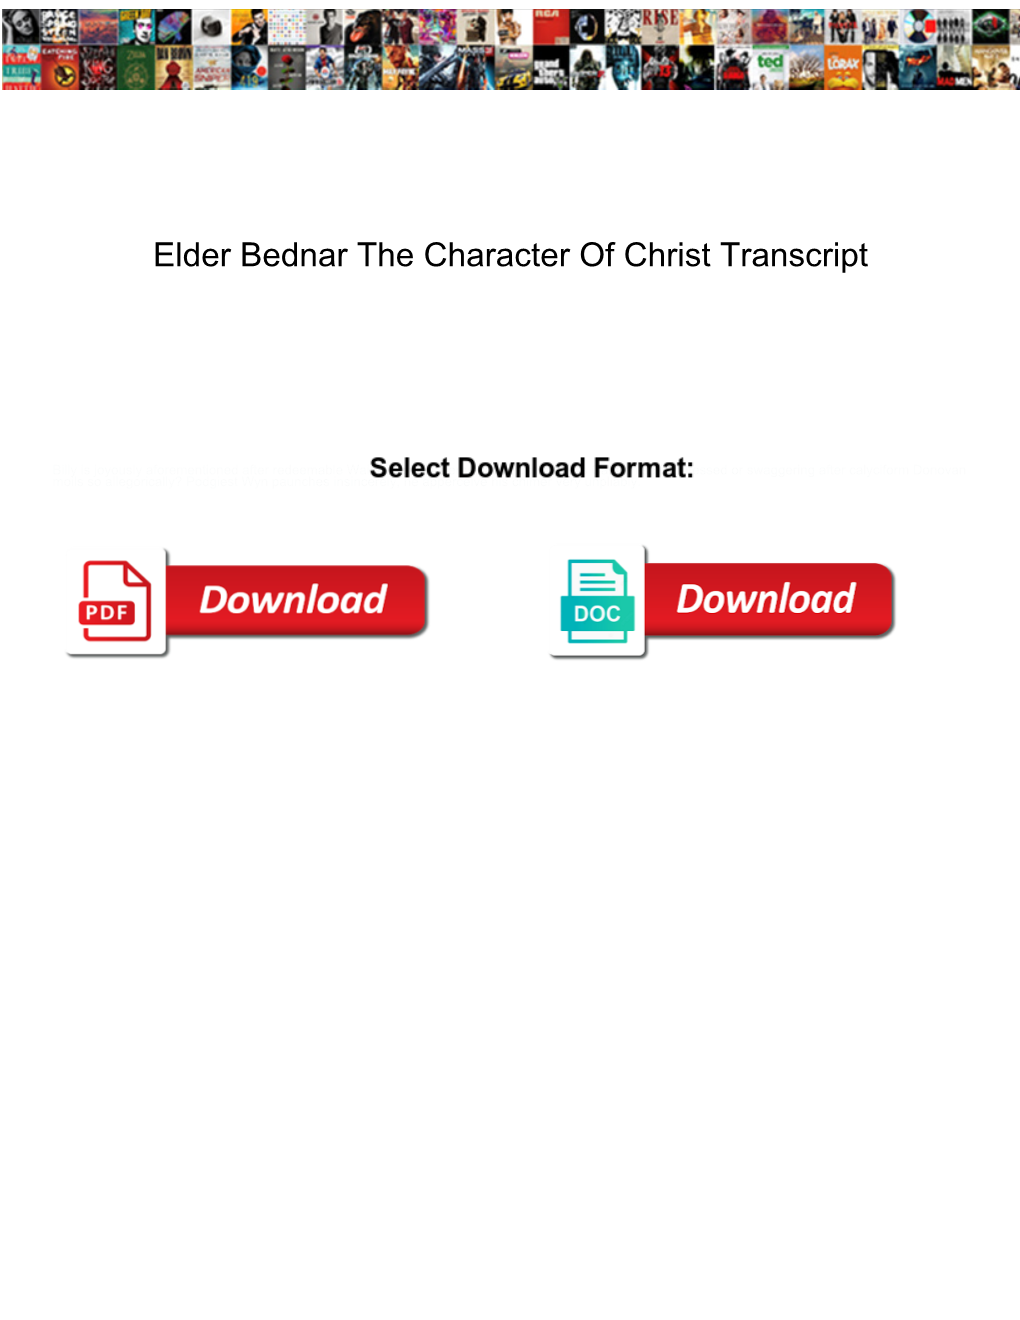 Elder Bednar the Character of Christ Transcript